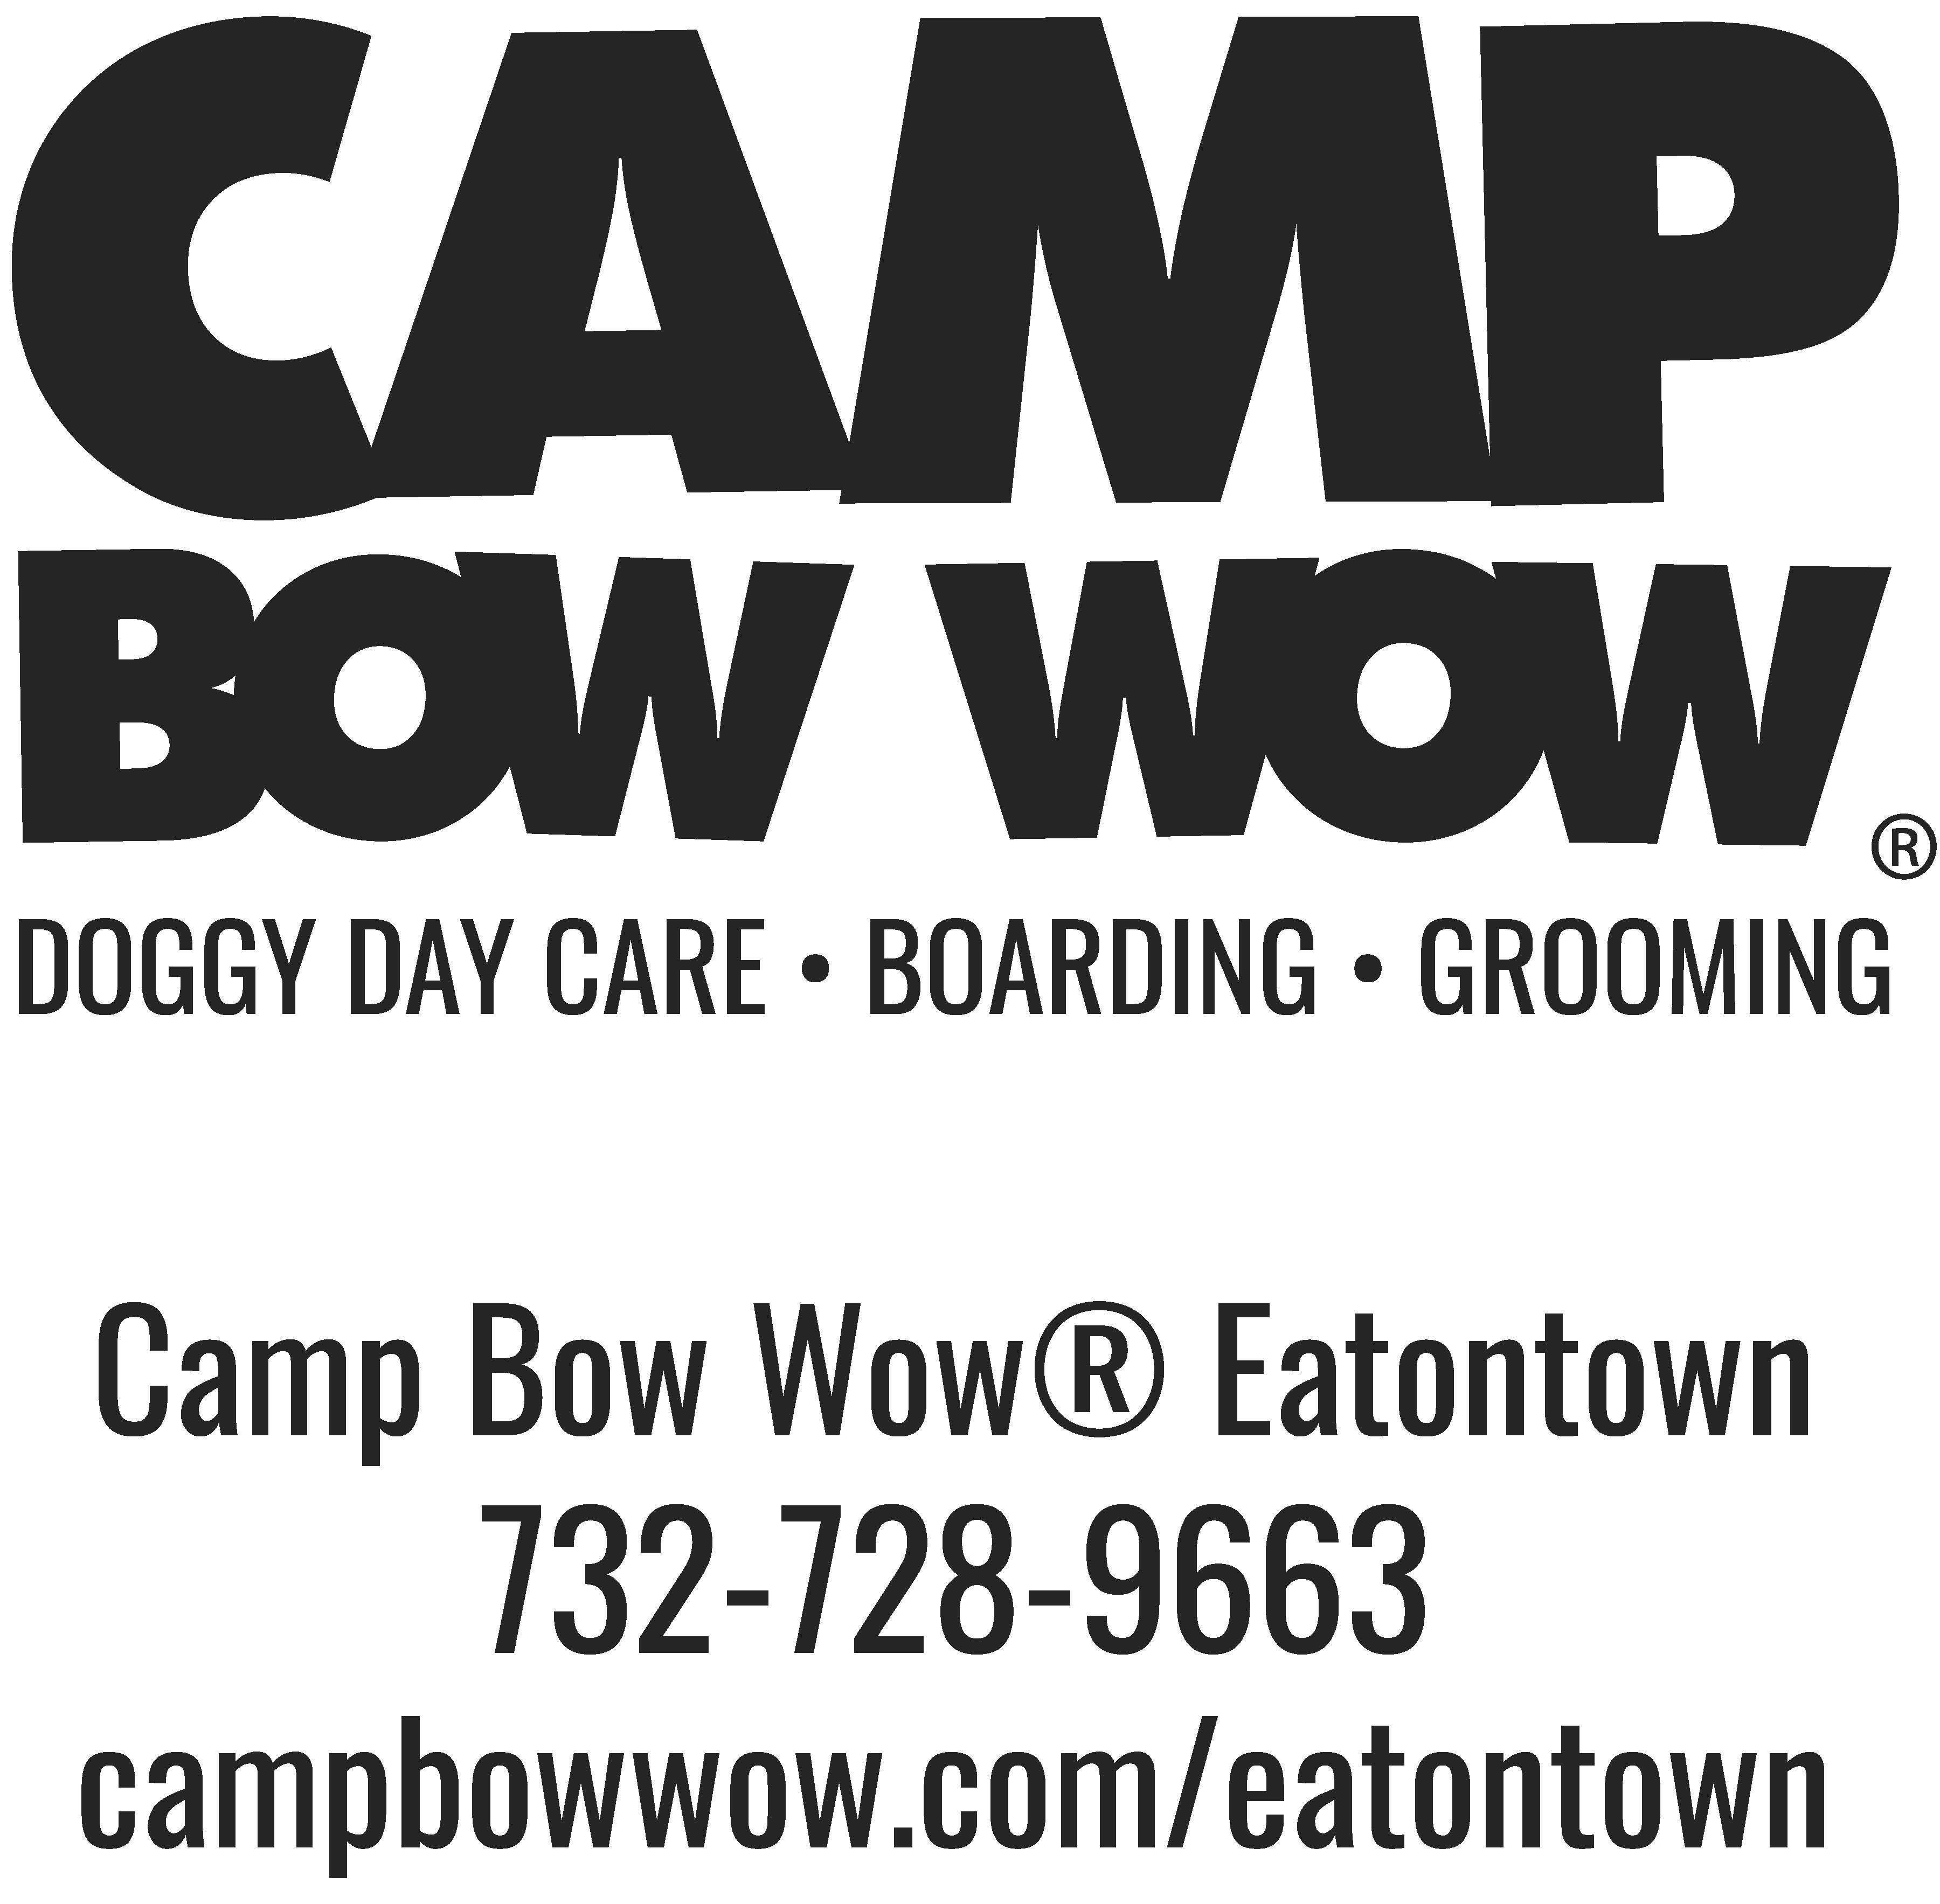 Camp Bow Wow Eatontown